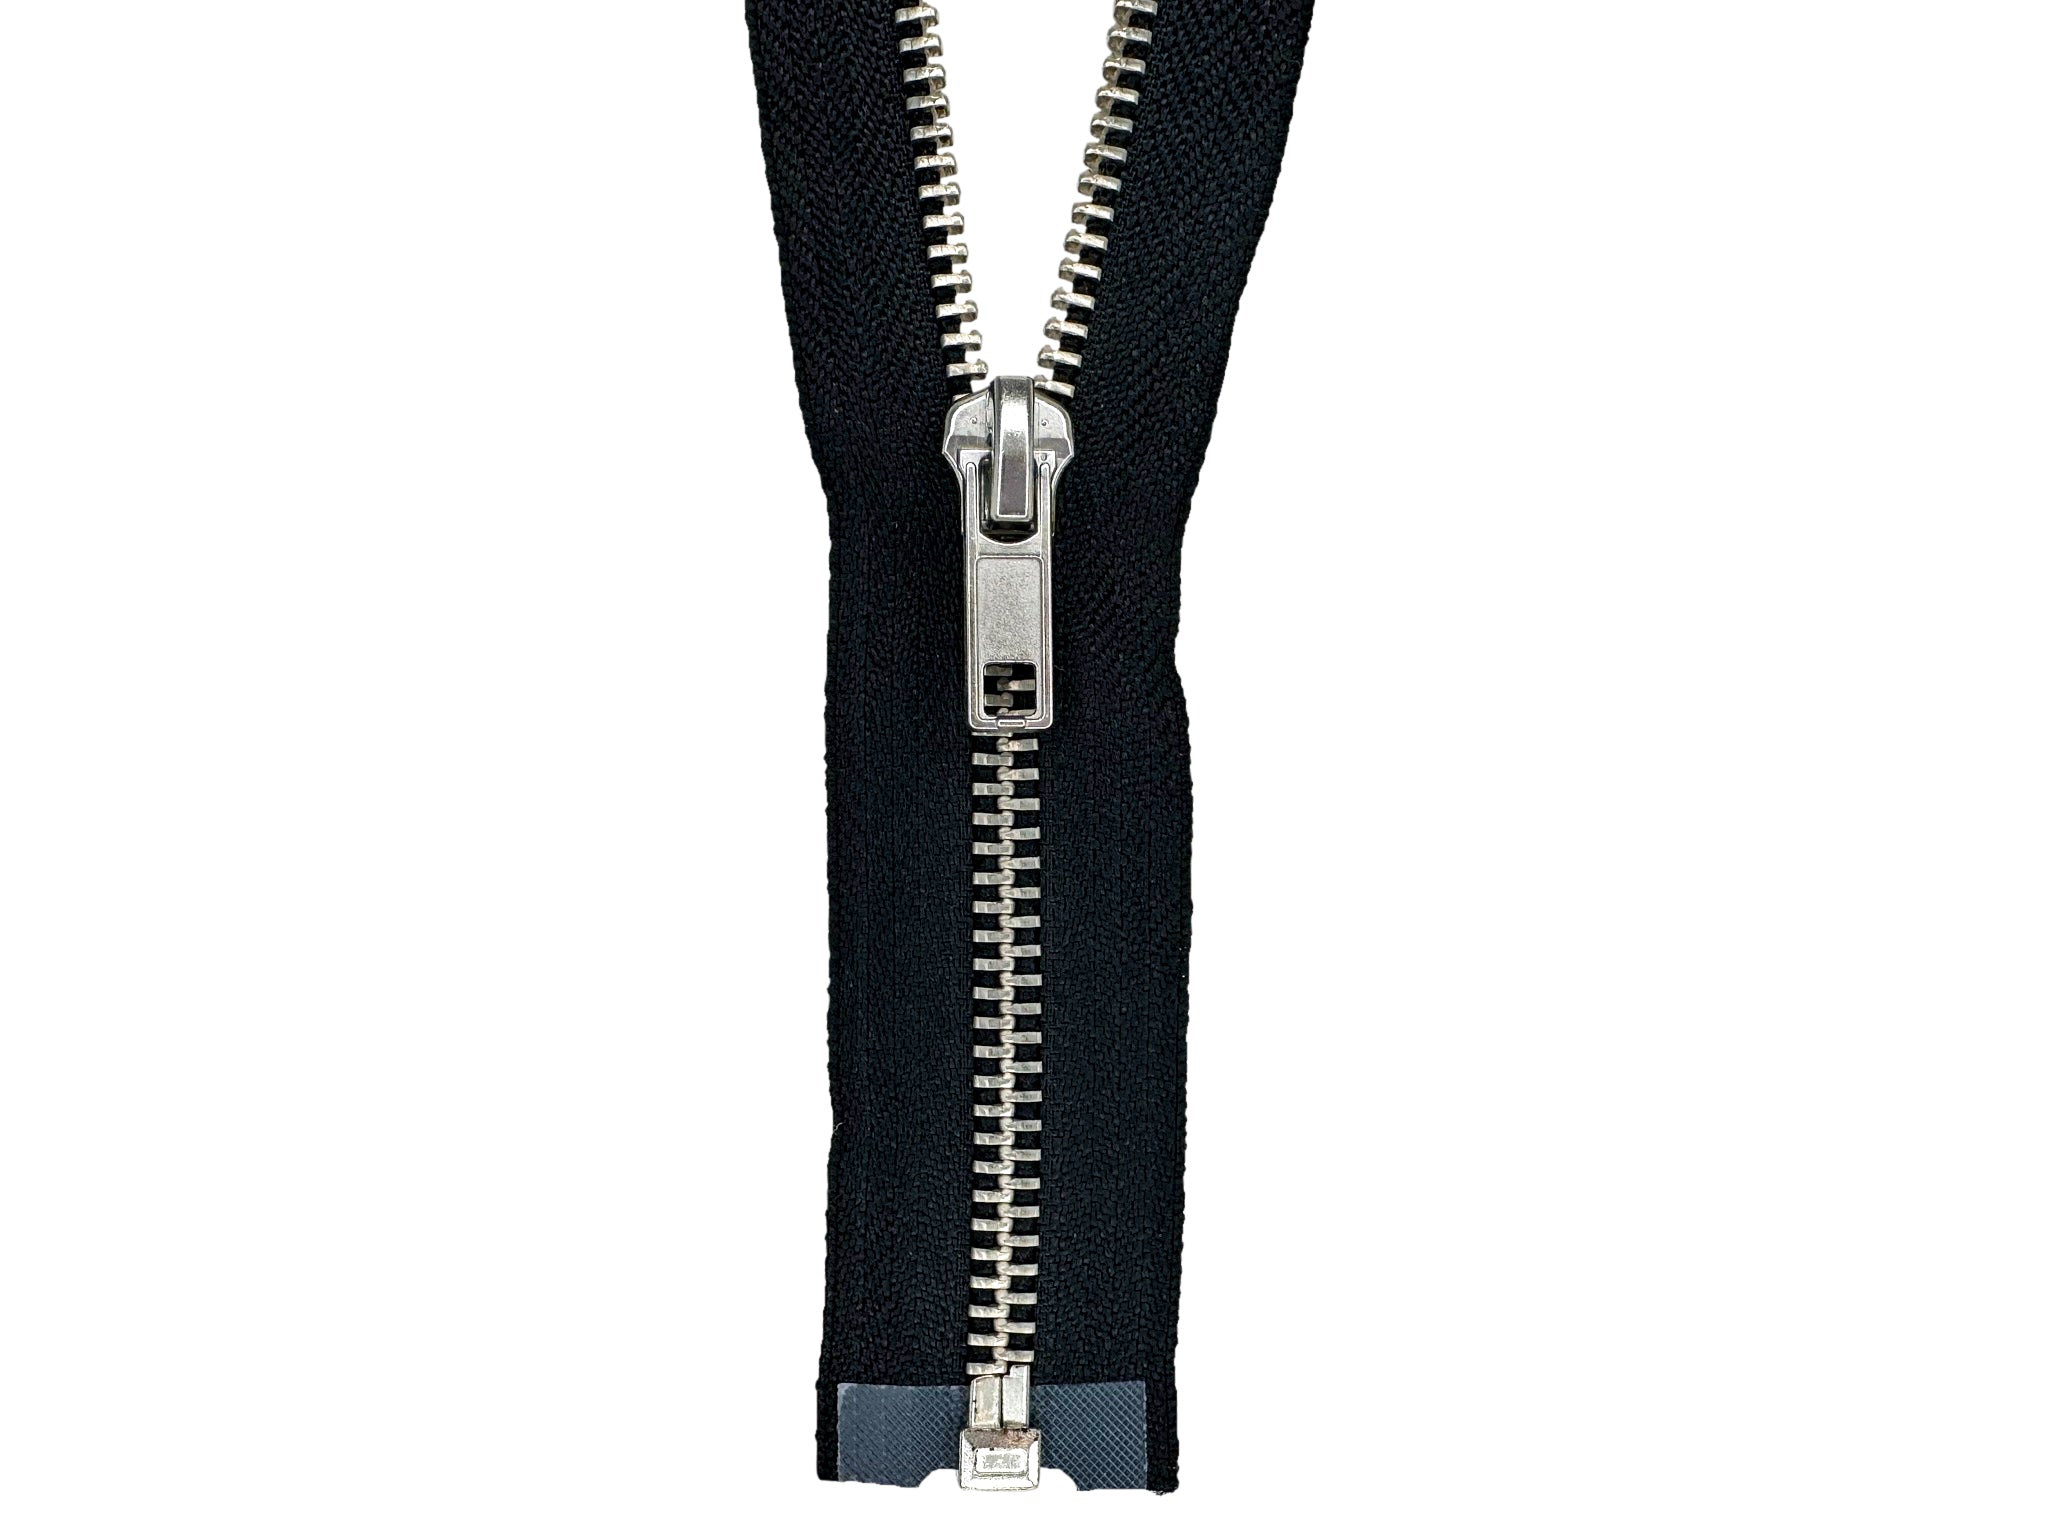 Zipper Repair Kit, Heavy Duty Zipper Pull , High Quality Nickel